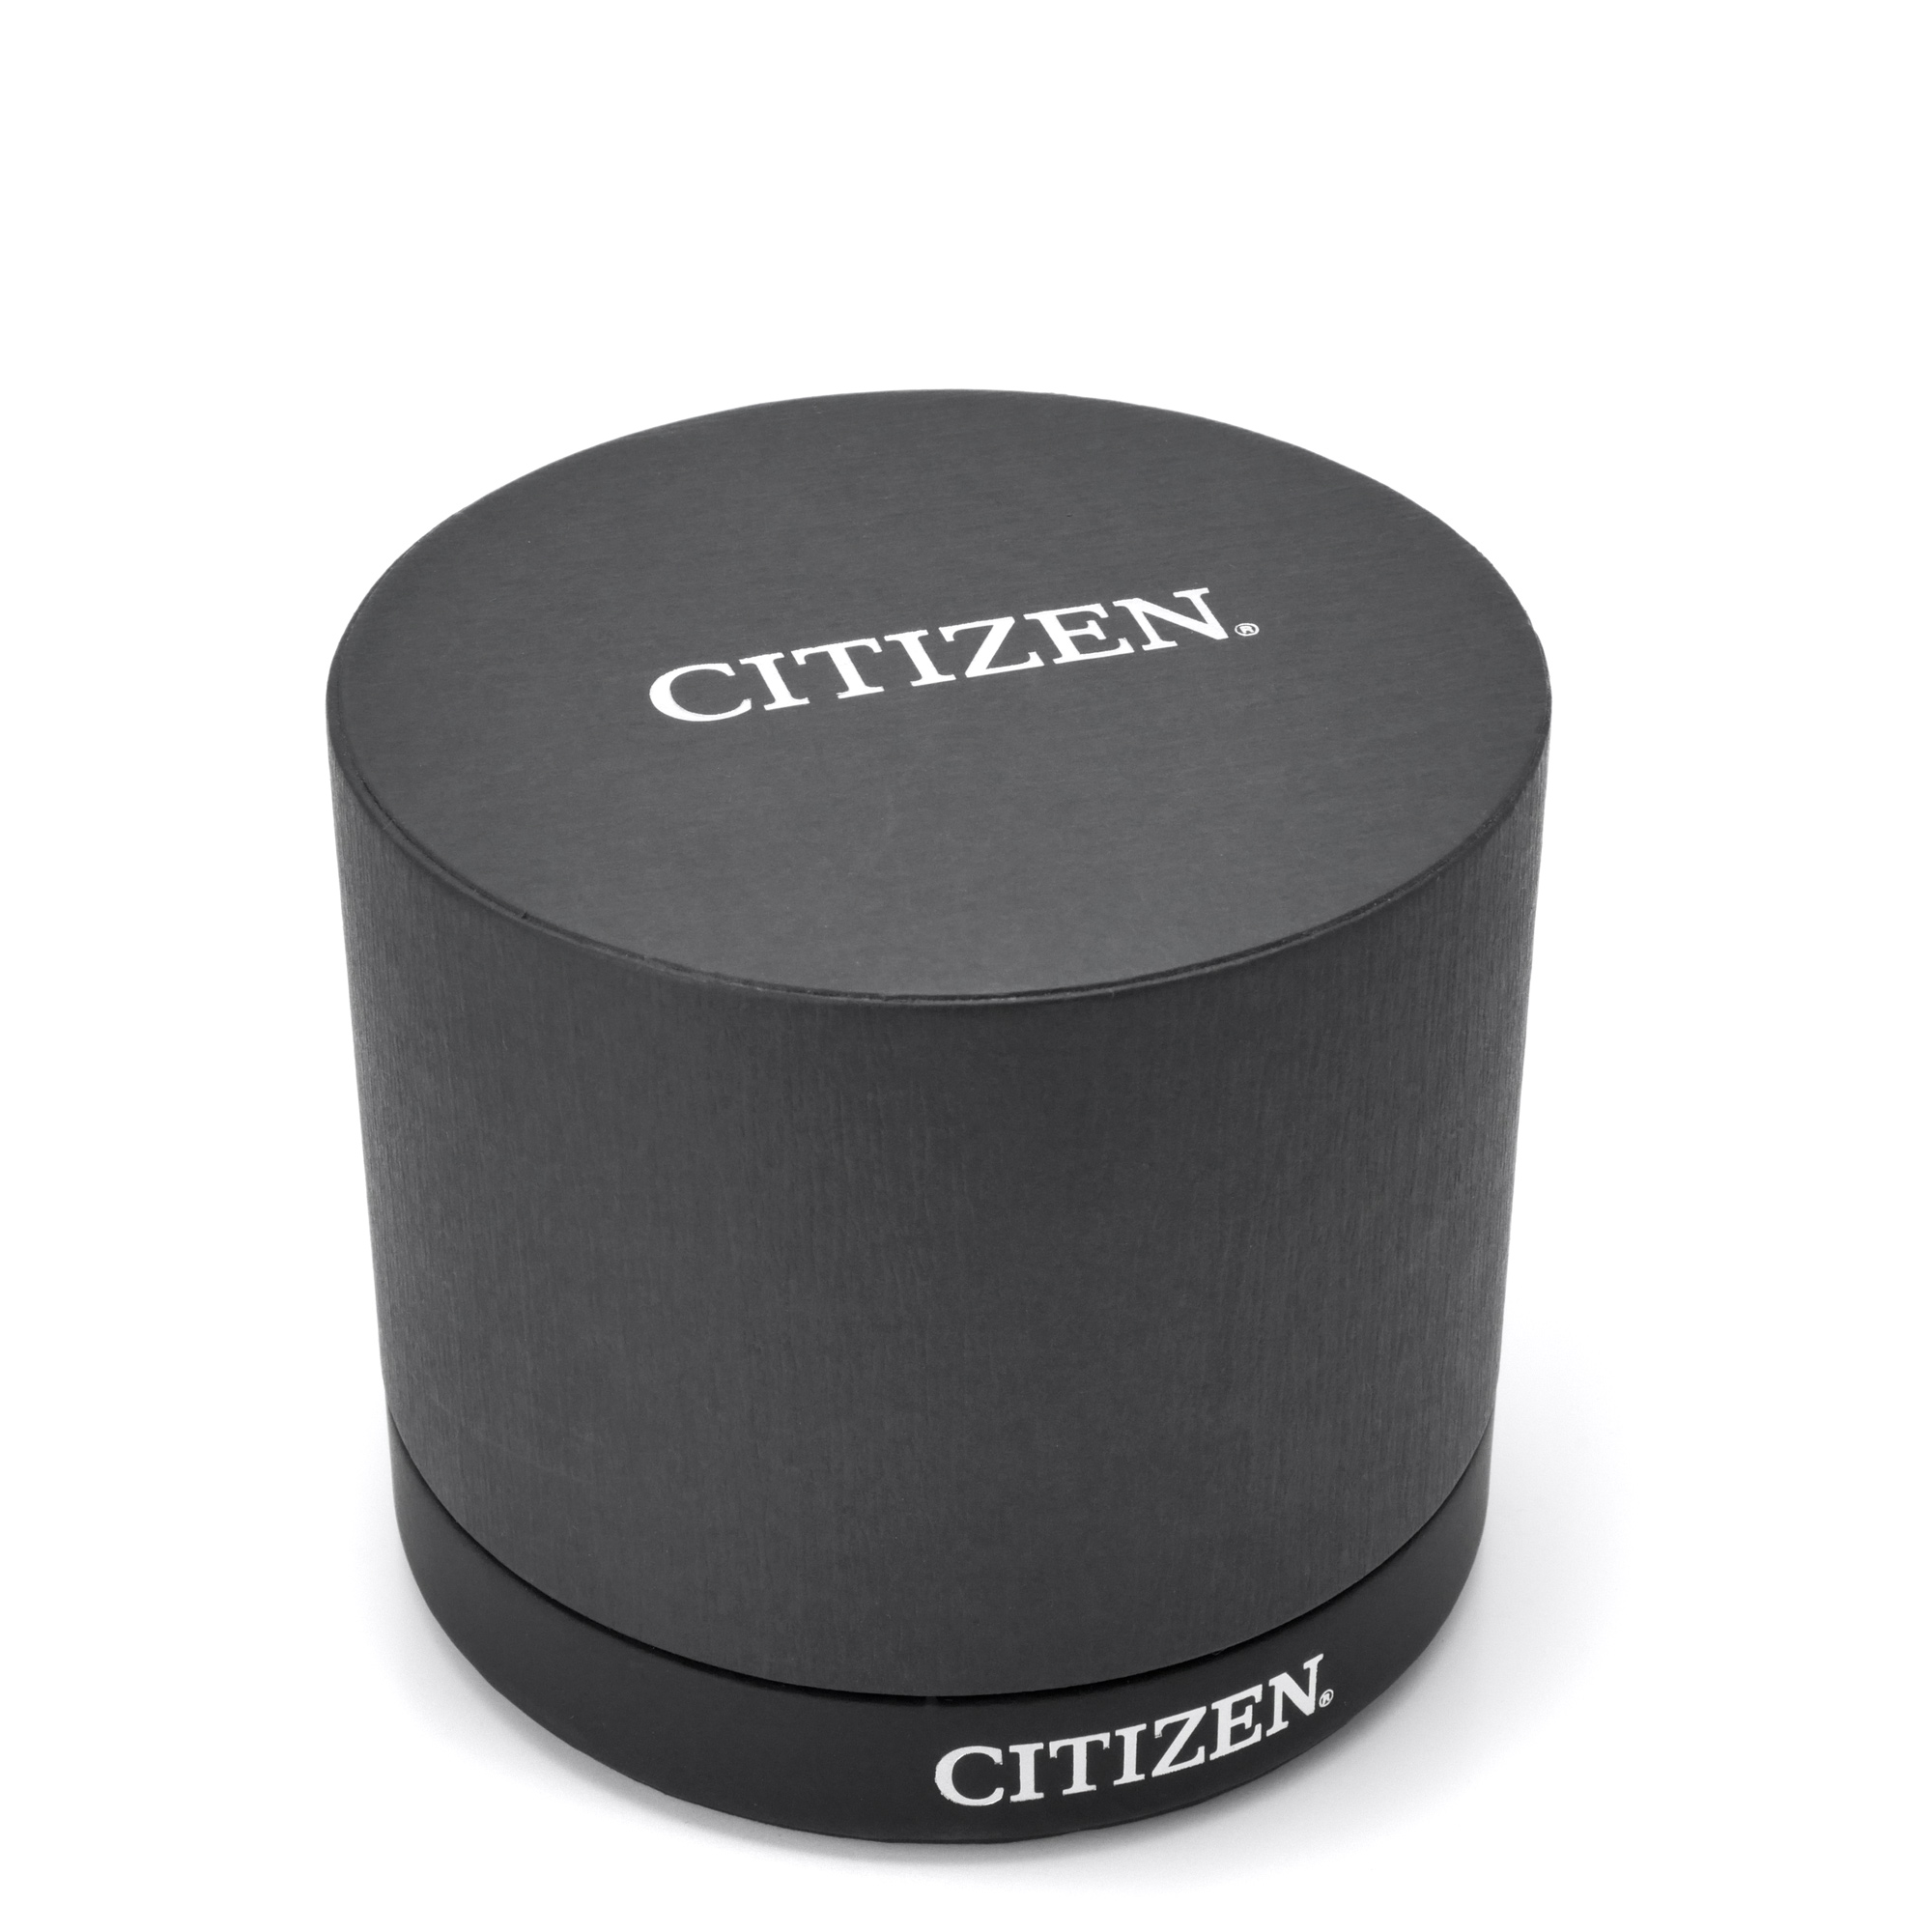 Citizen Eco-Drive Chronograph Atomic Timekeeping Men's Watch AT8027-55H